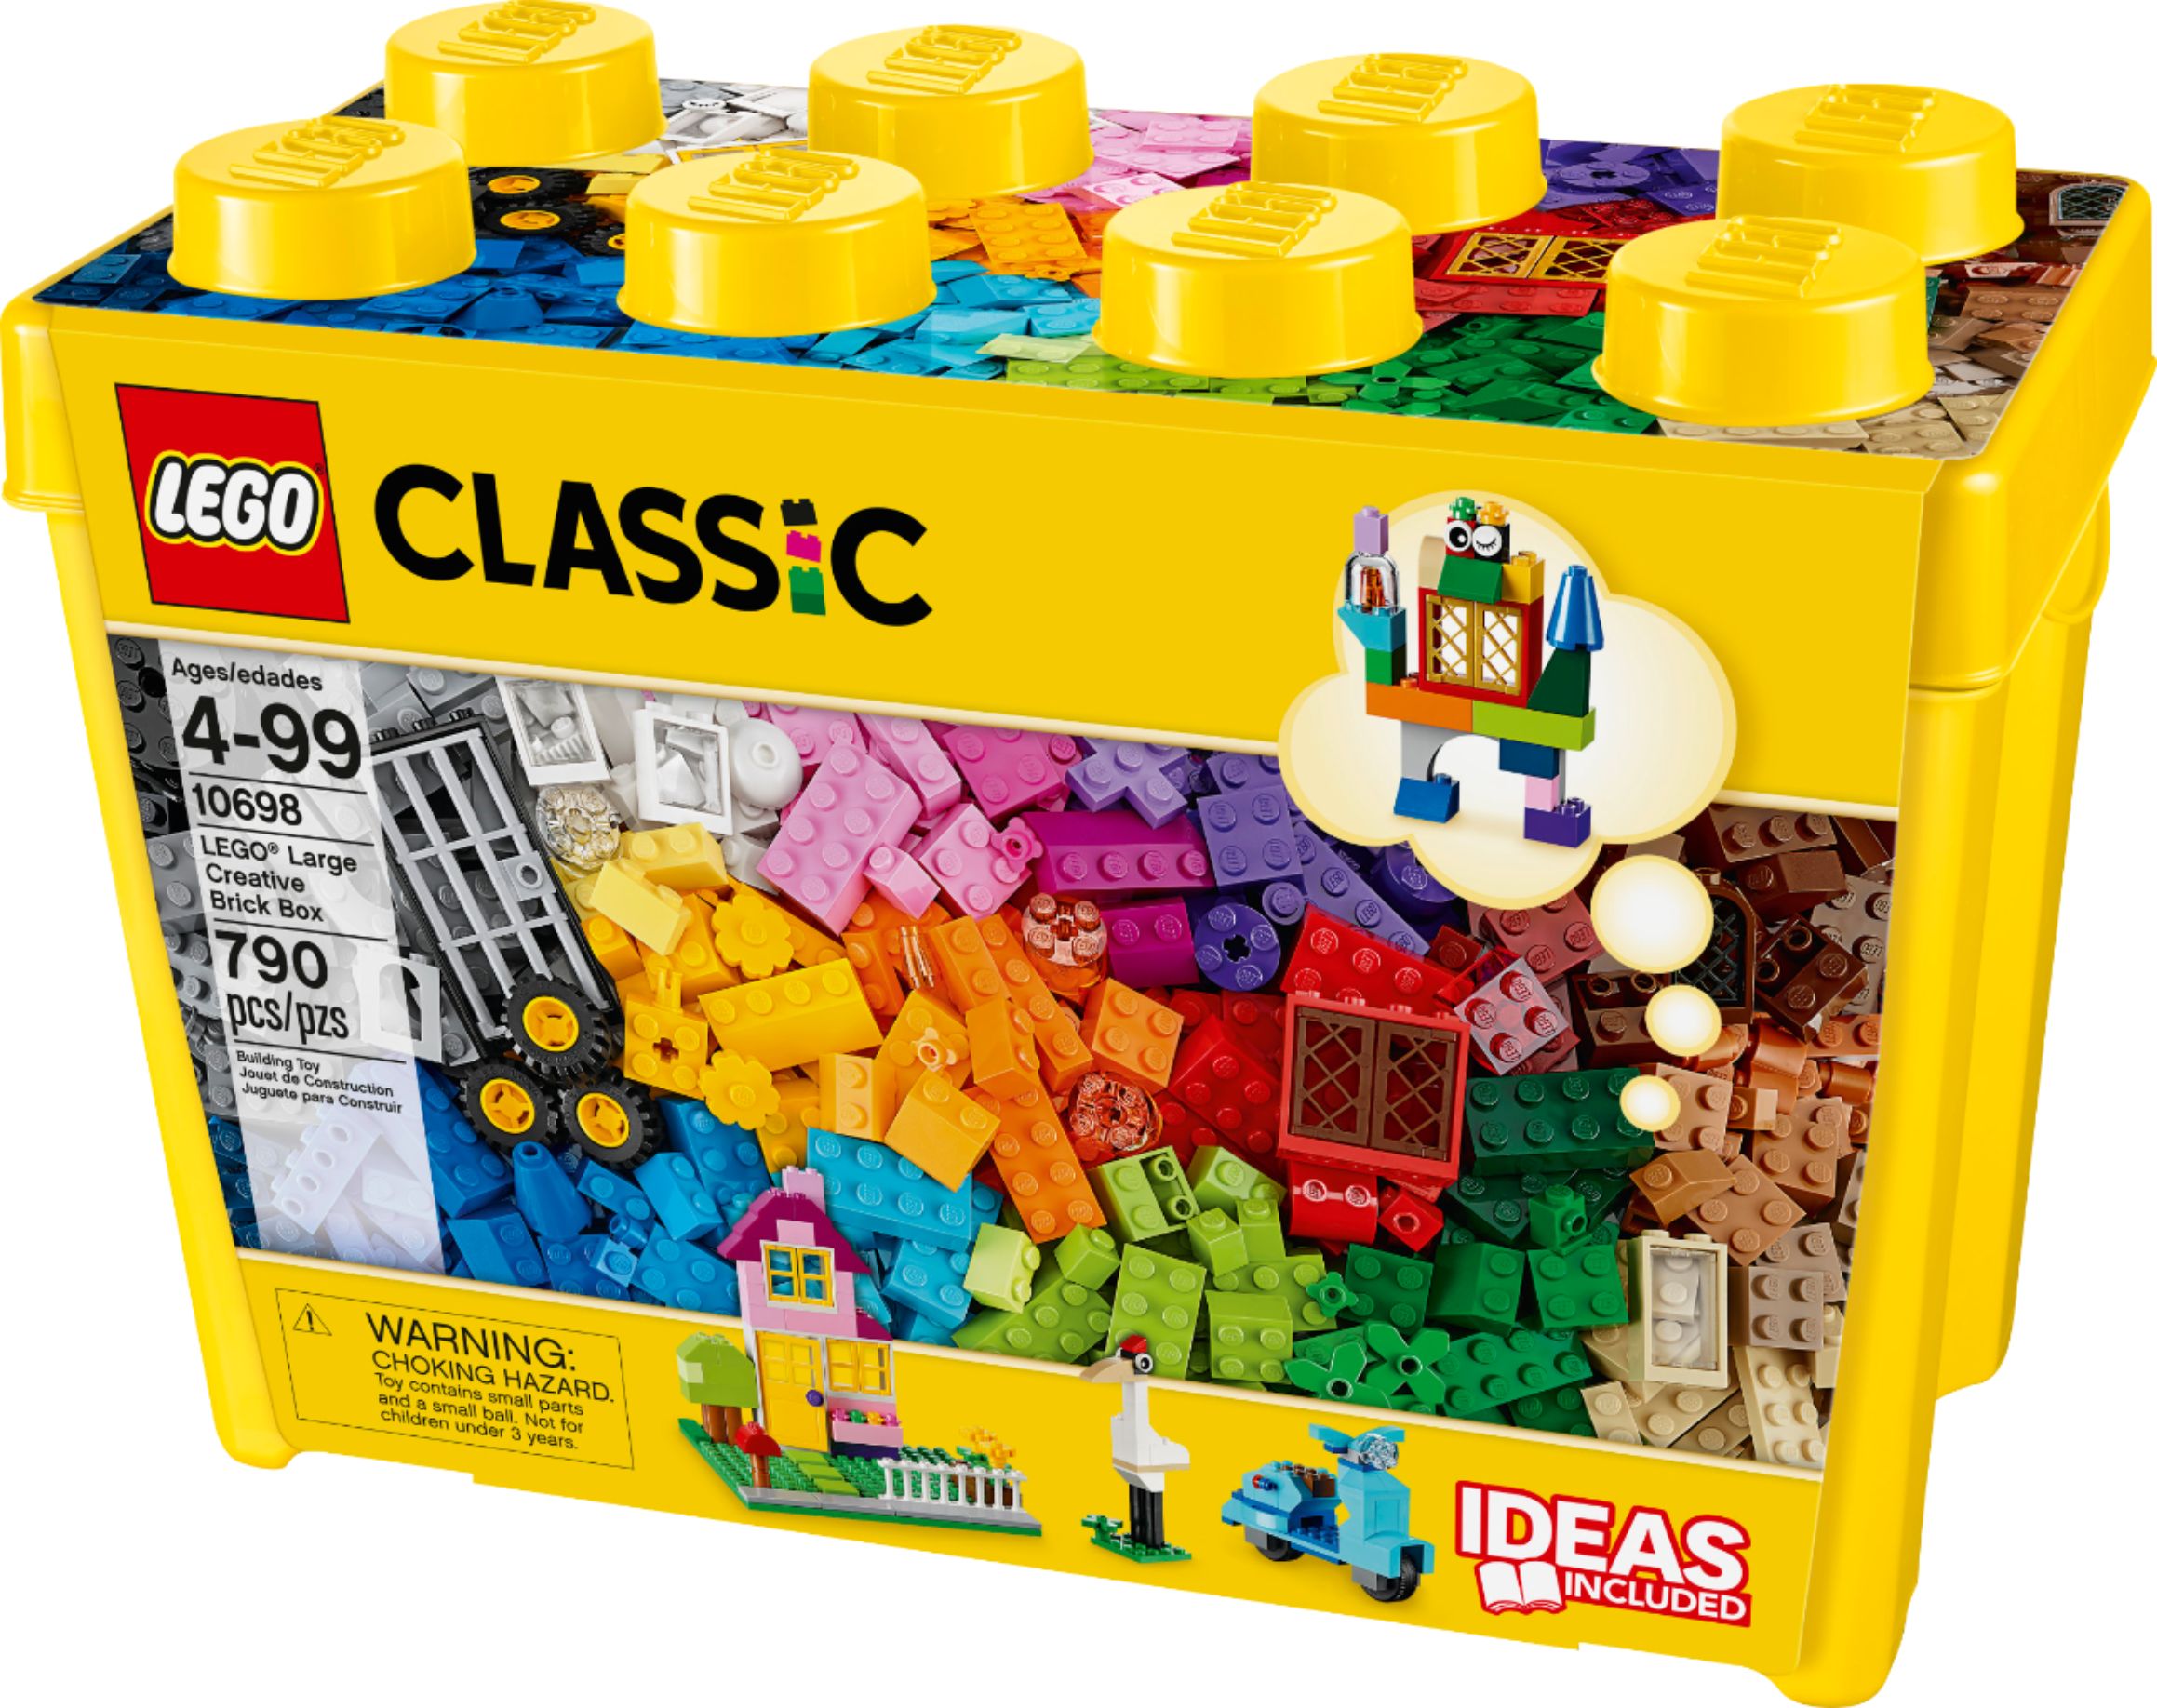 790 Pieces LEGO Classic Large Creative Brick Box 10698